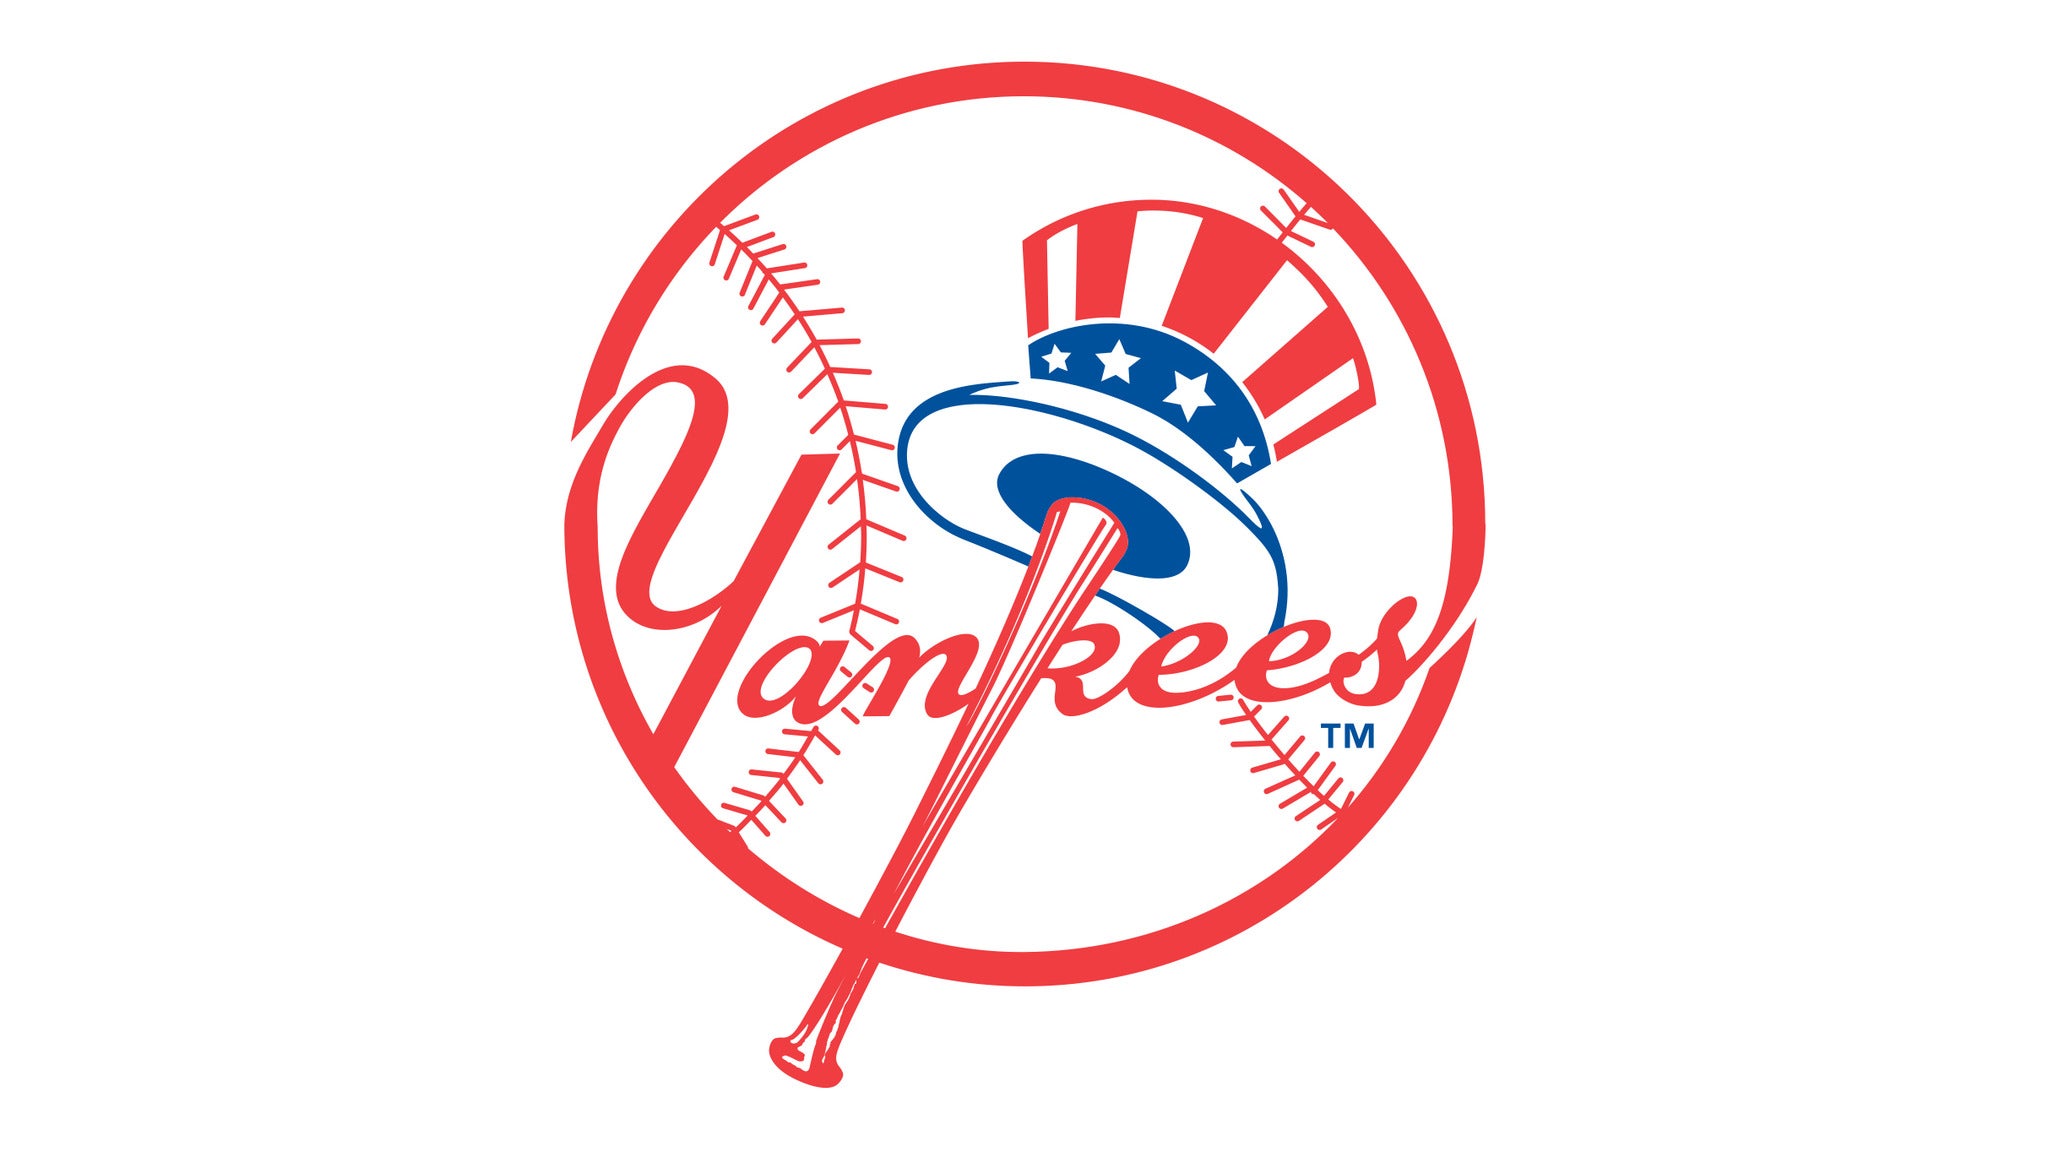 New York Yankees v. Boston Red Sox